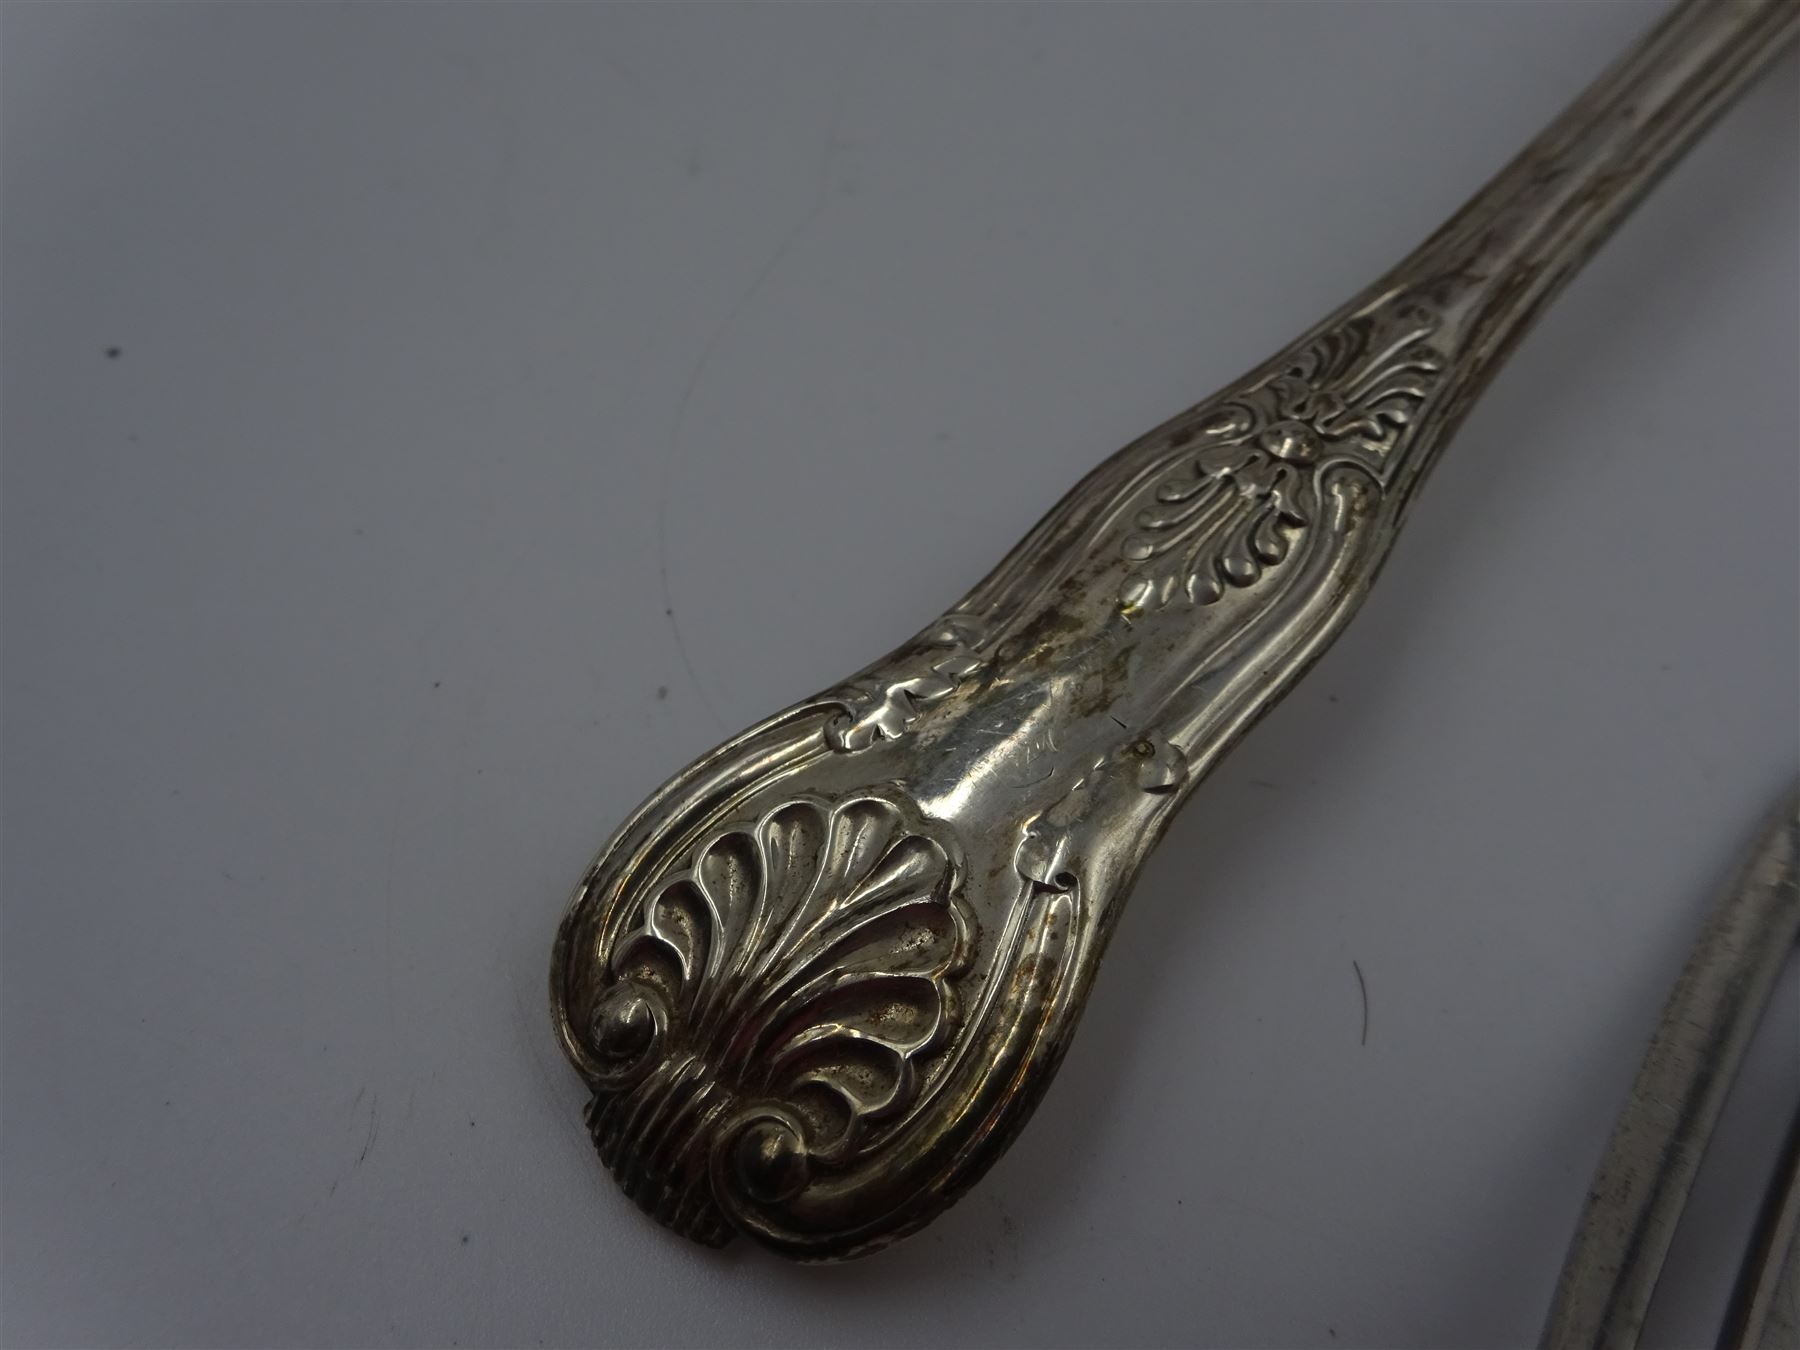 George IV silver Kings pattern dessert spoon - Image 2 of 3